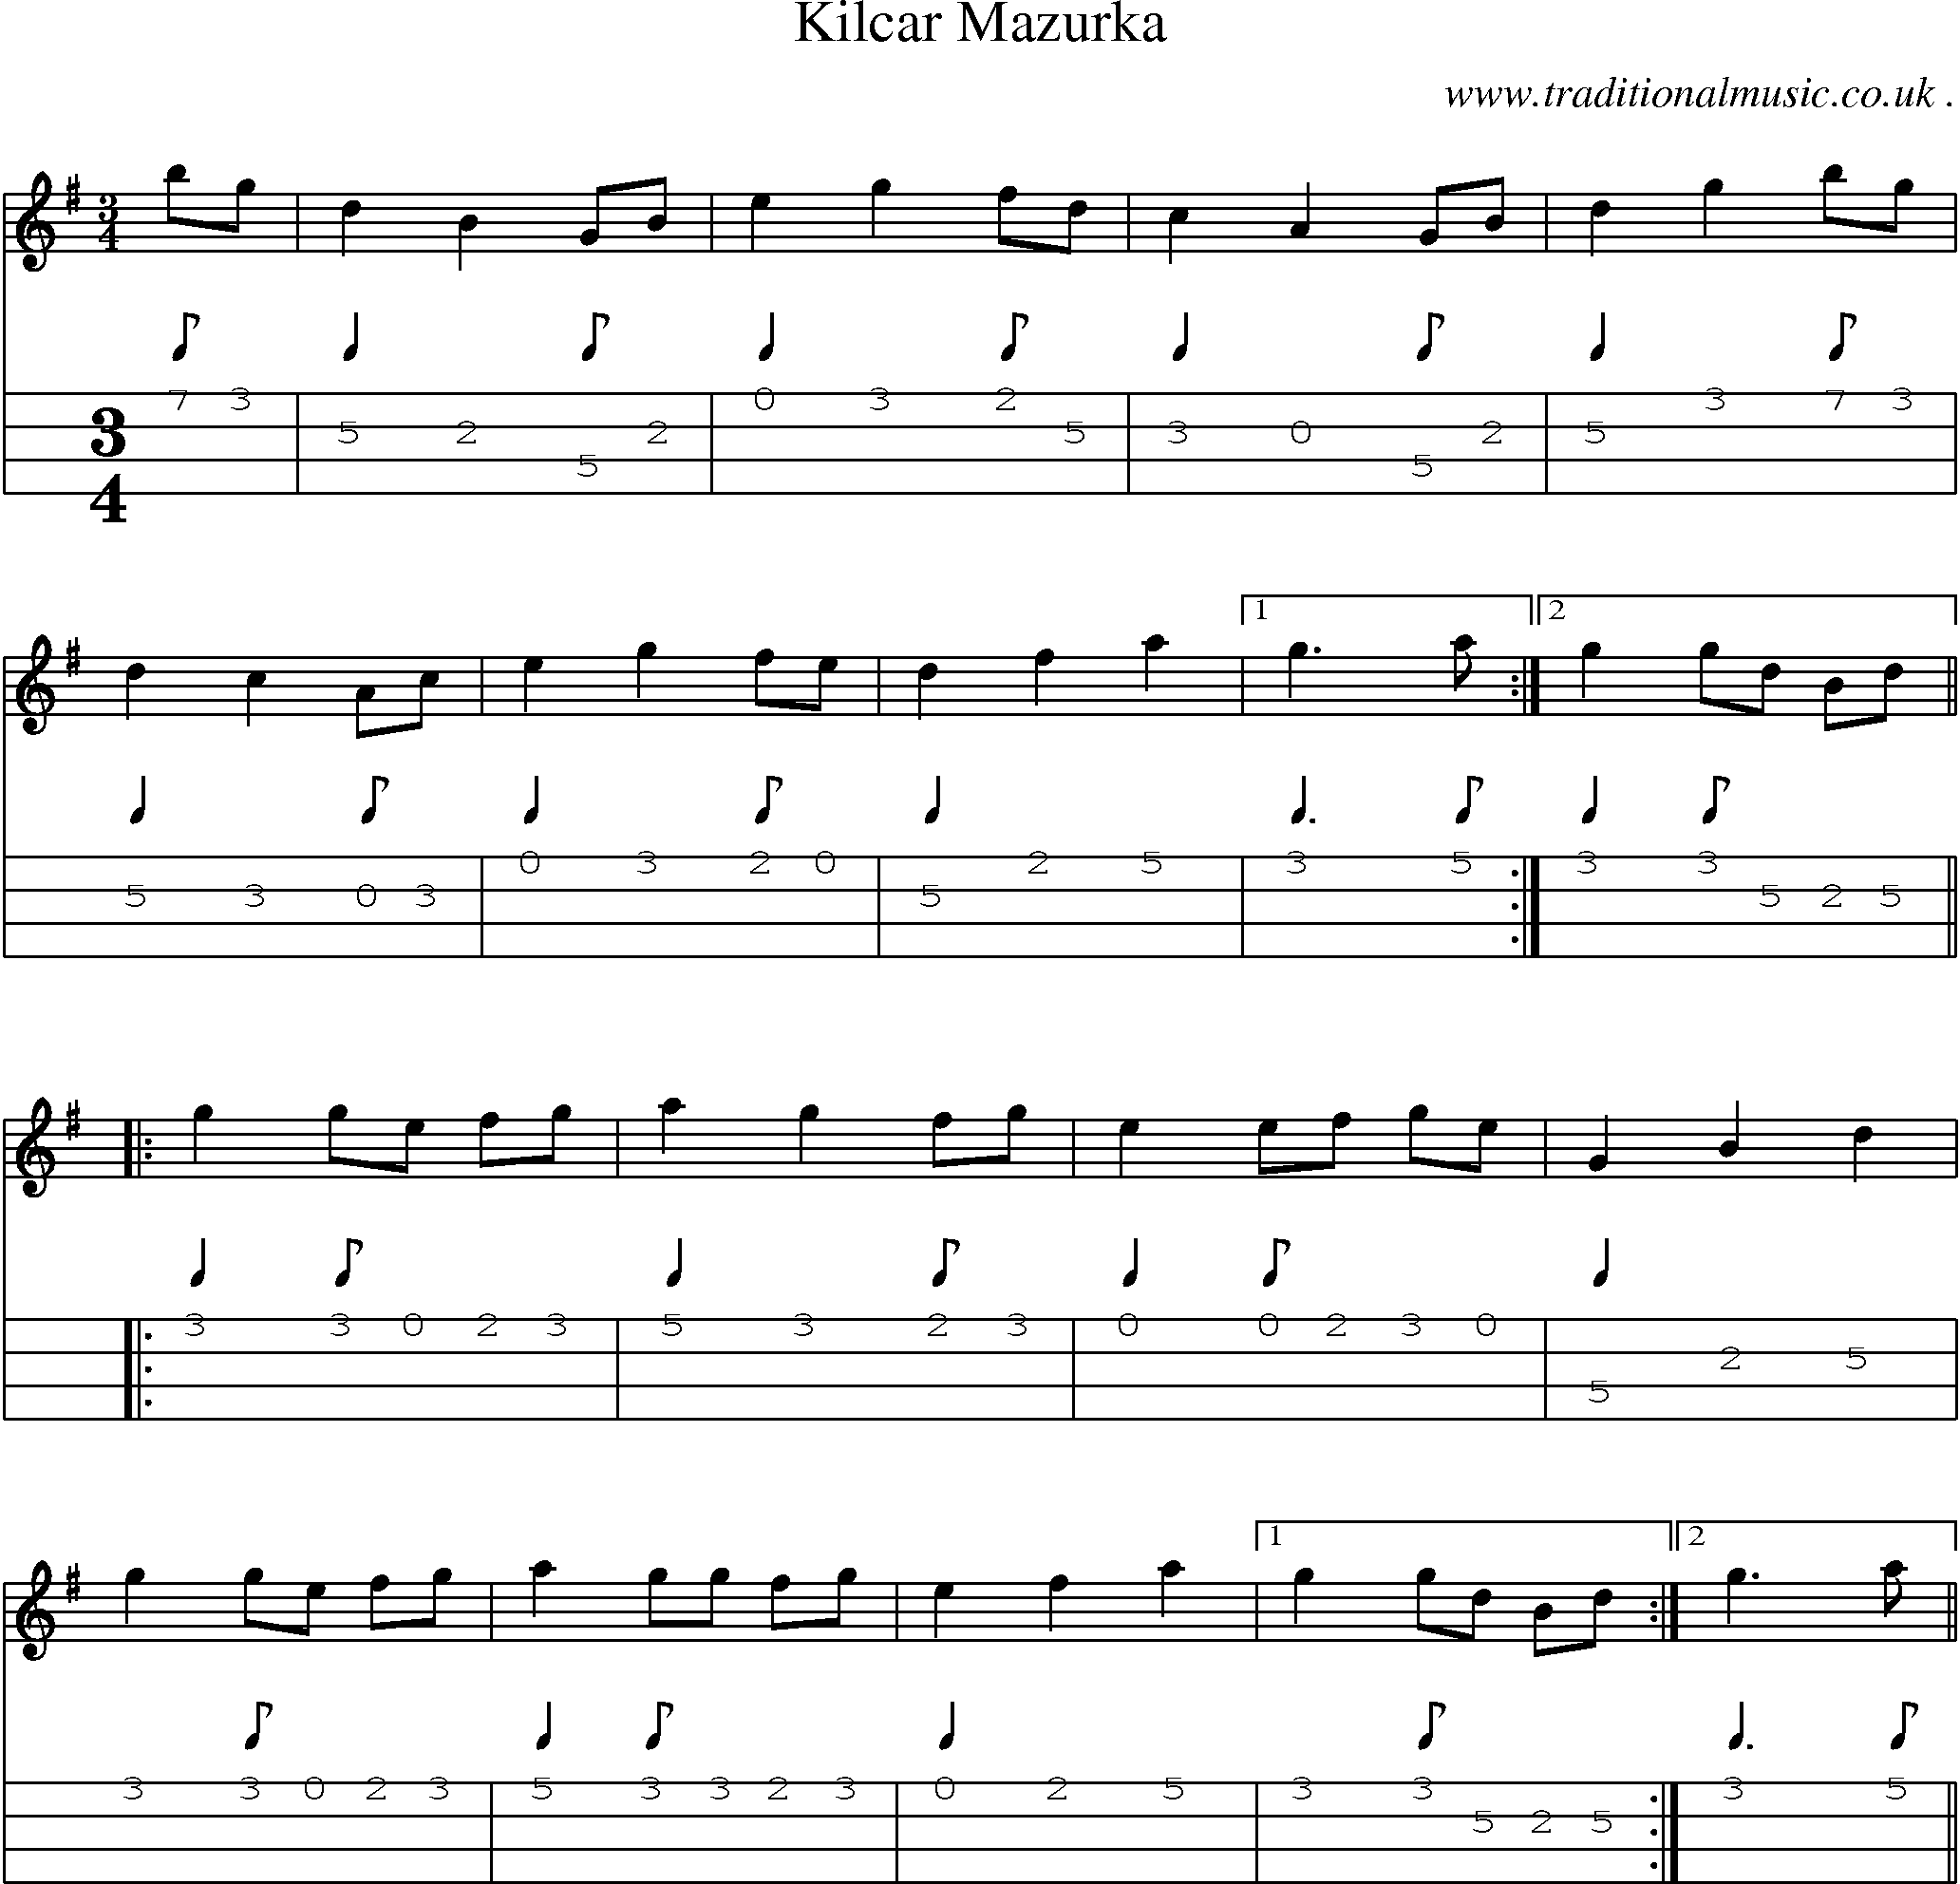 Sheet-Music and Mandolin Tabs for Kilcar Mazurka